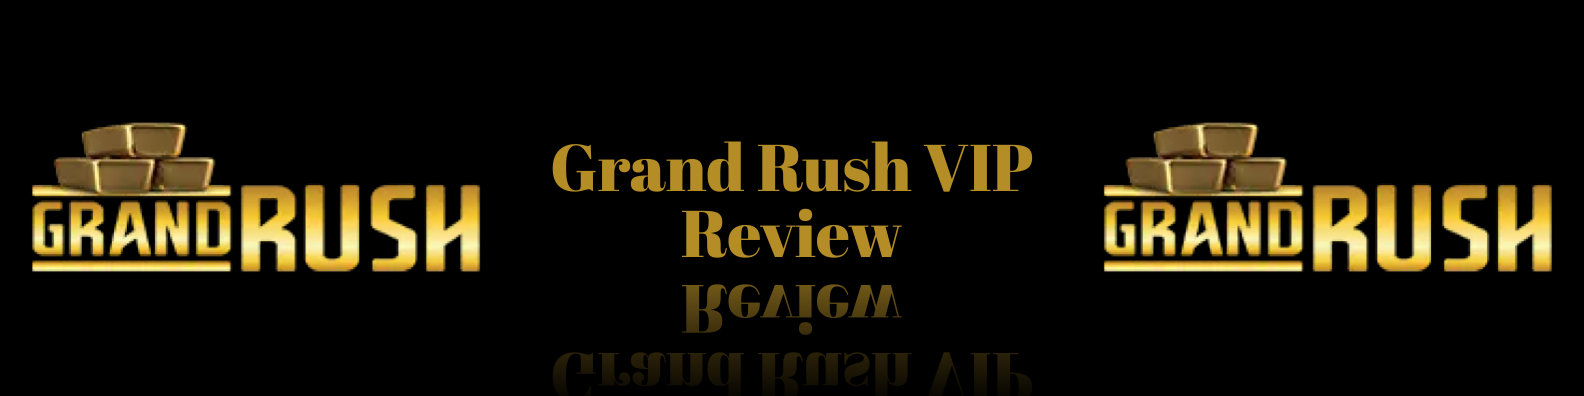 Grand Rush VIP Review